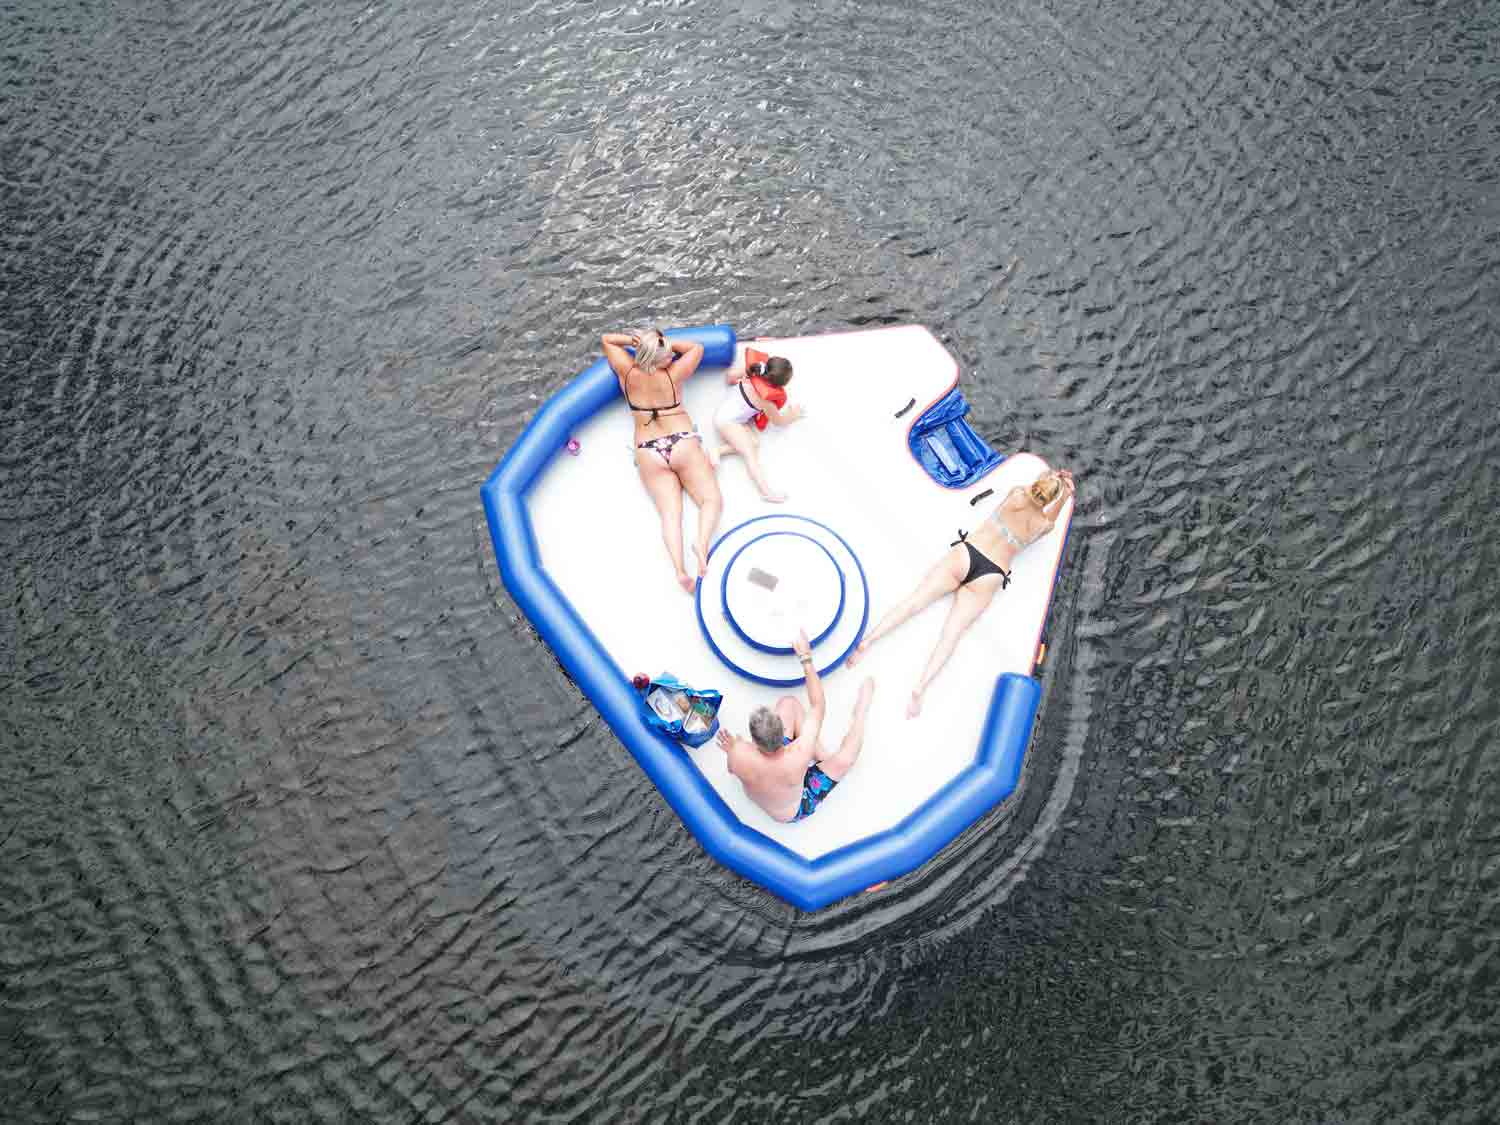 Floating Island inflatable